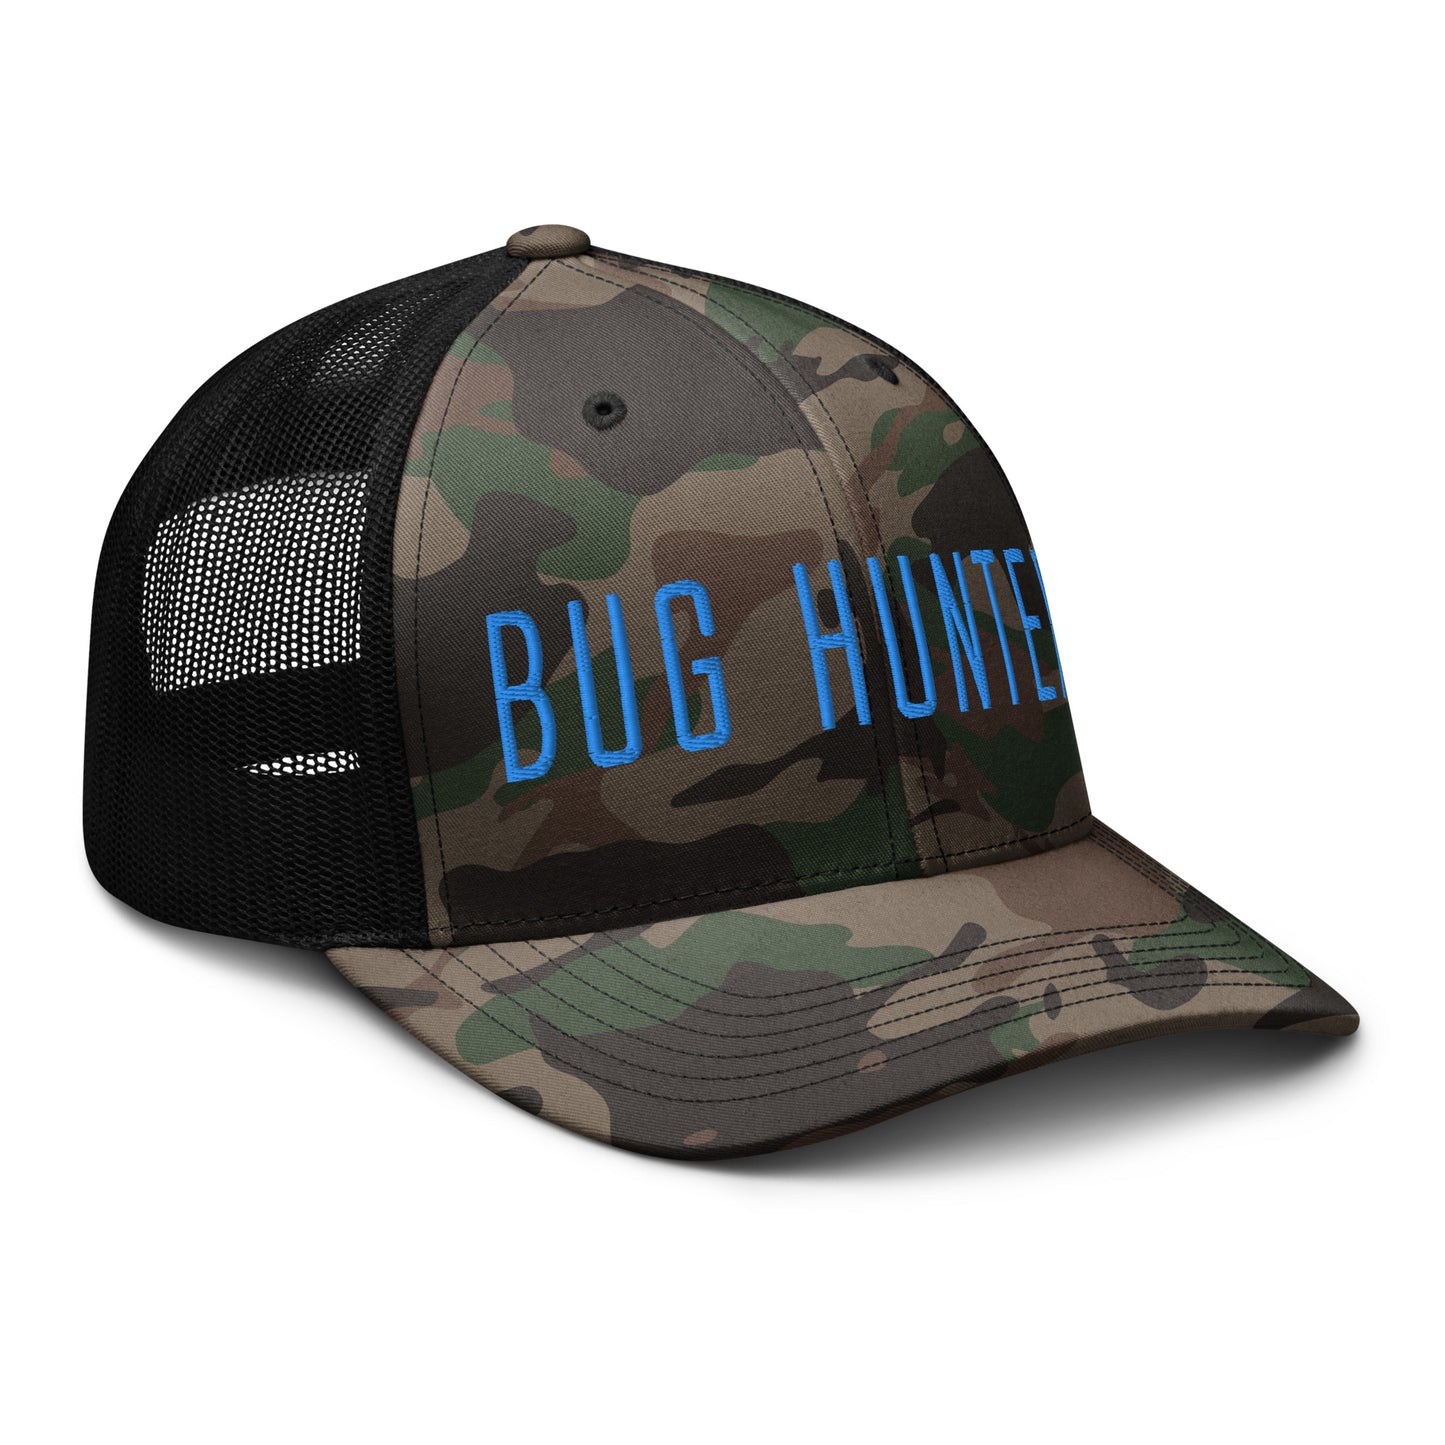 Bug Hunter camouflage trucker hat